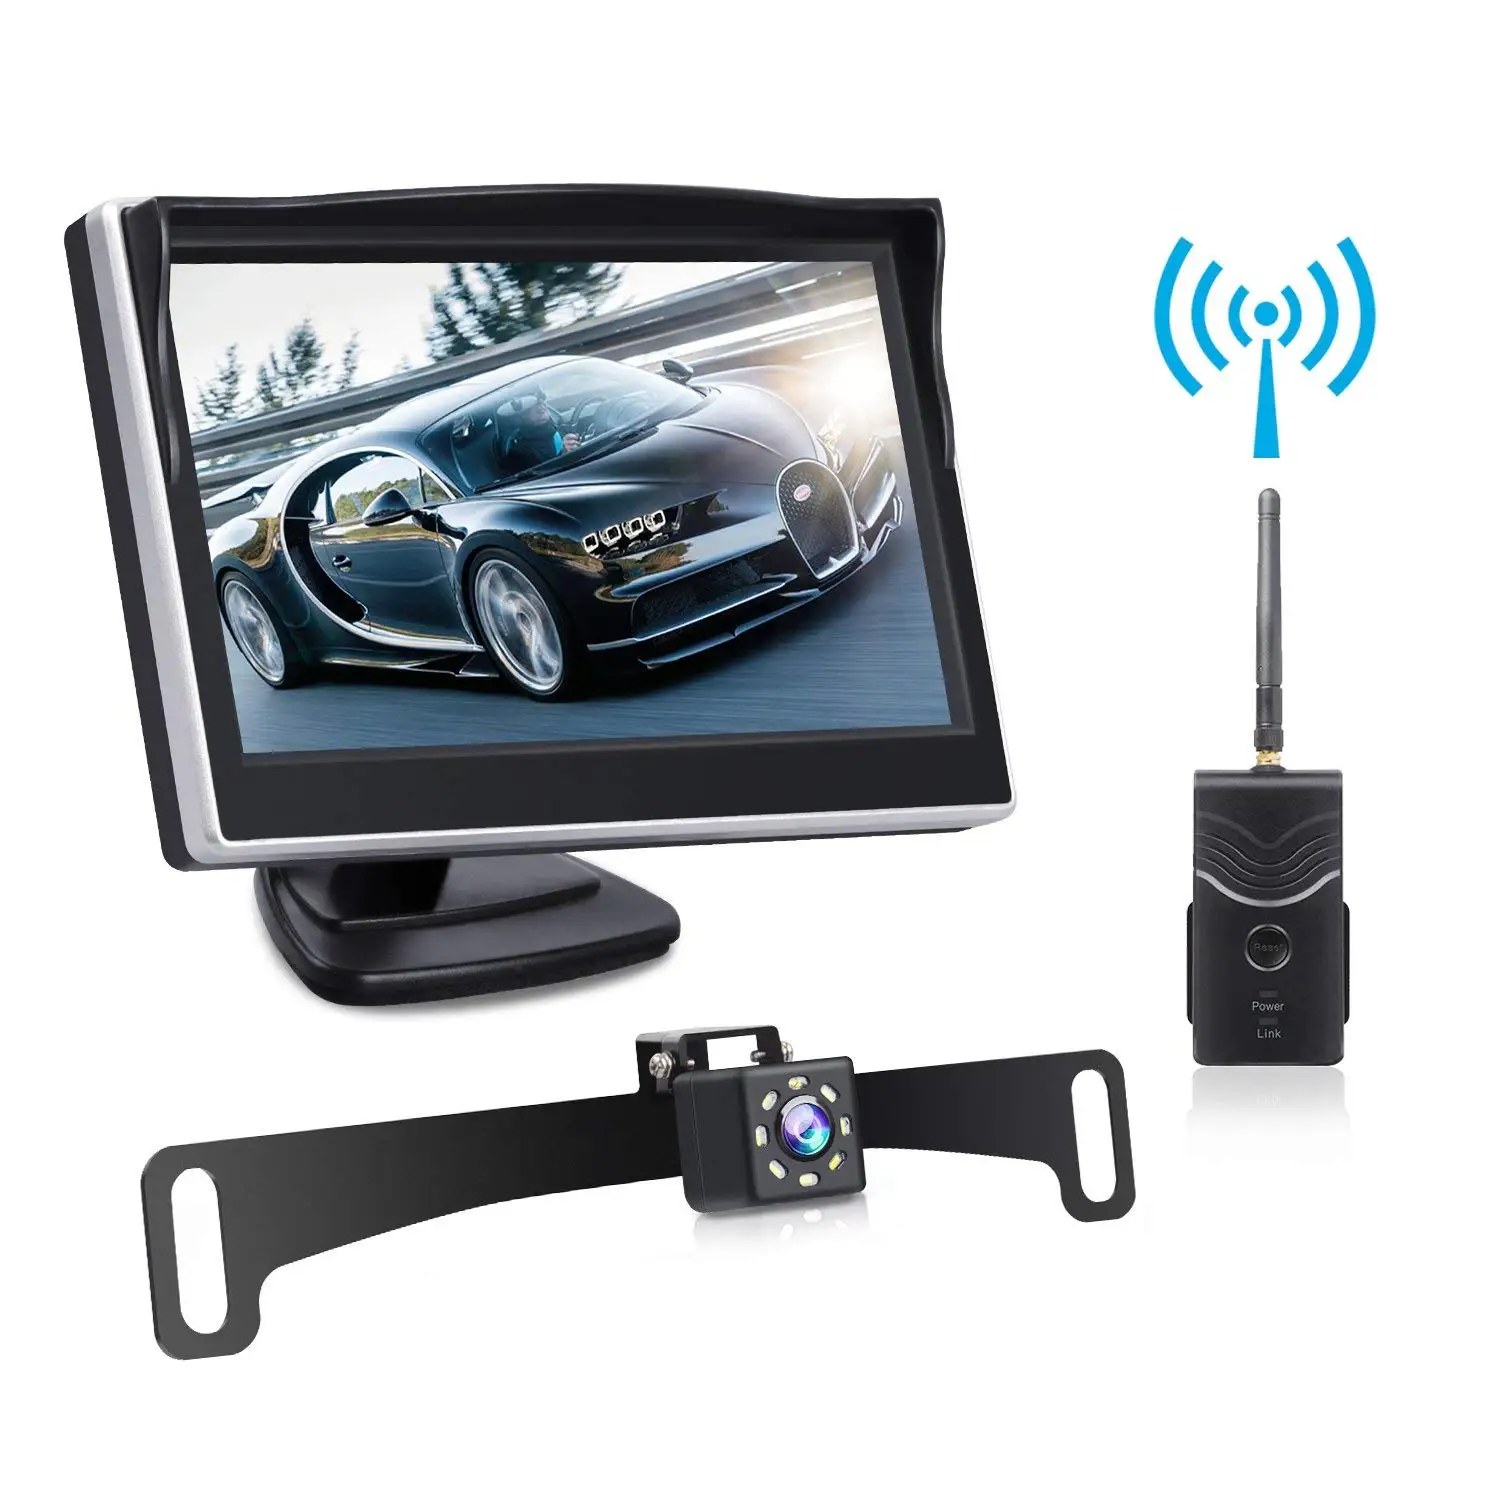 Buy Digital Wireless Backup Camera Kit, TOGUARD 5' LCD Backup Monitor